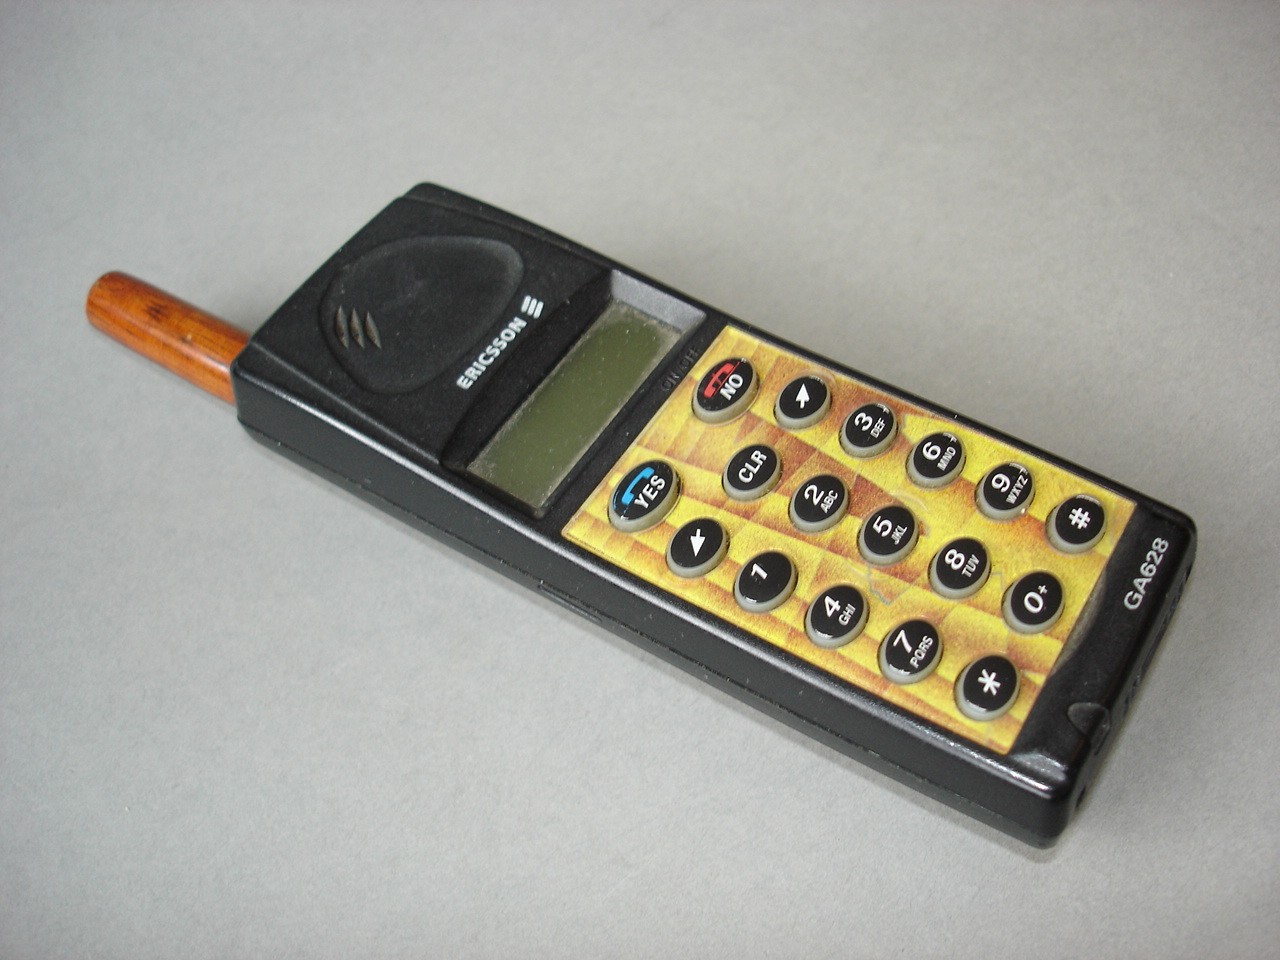 Ericsson GA868 mobiltelefon (Postamúzeum CC BY-NC-SA)